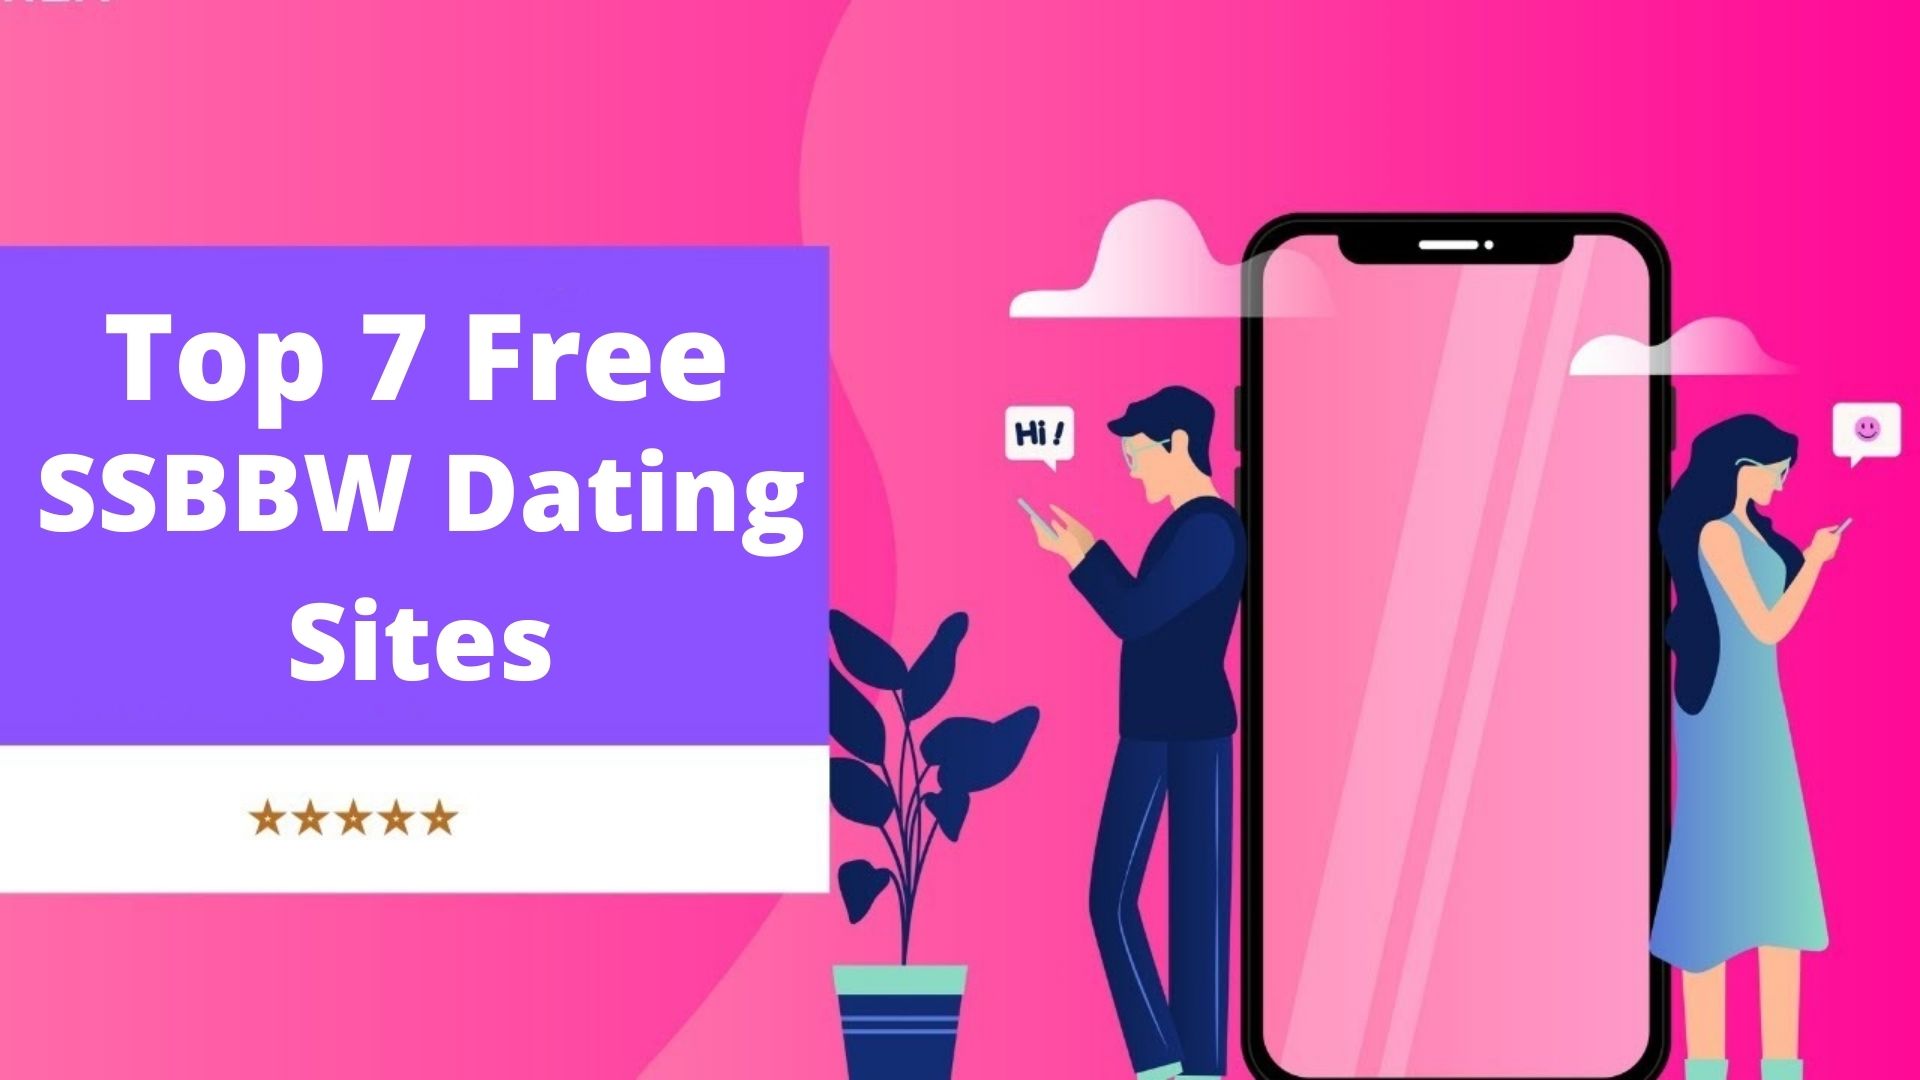 SSBBW Dating Sites